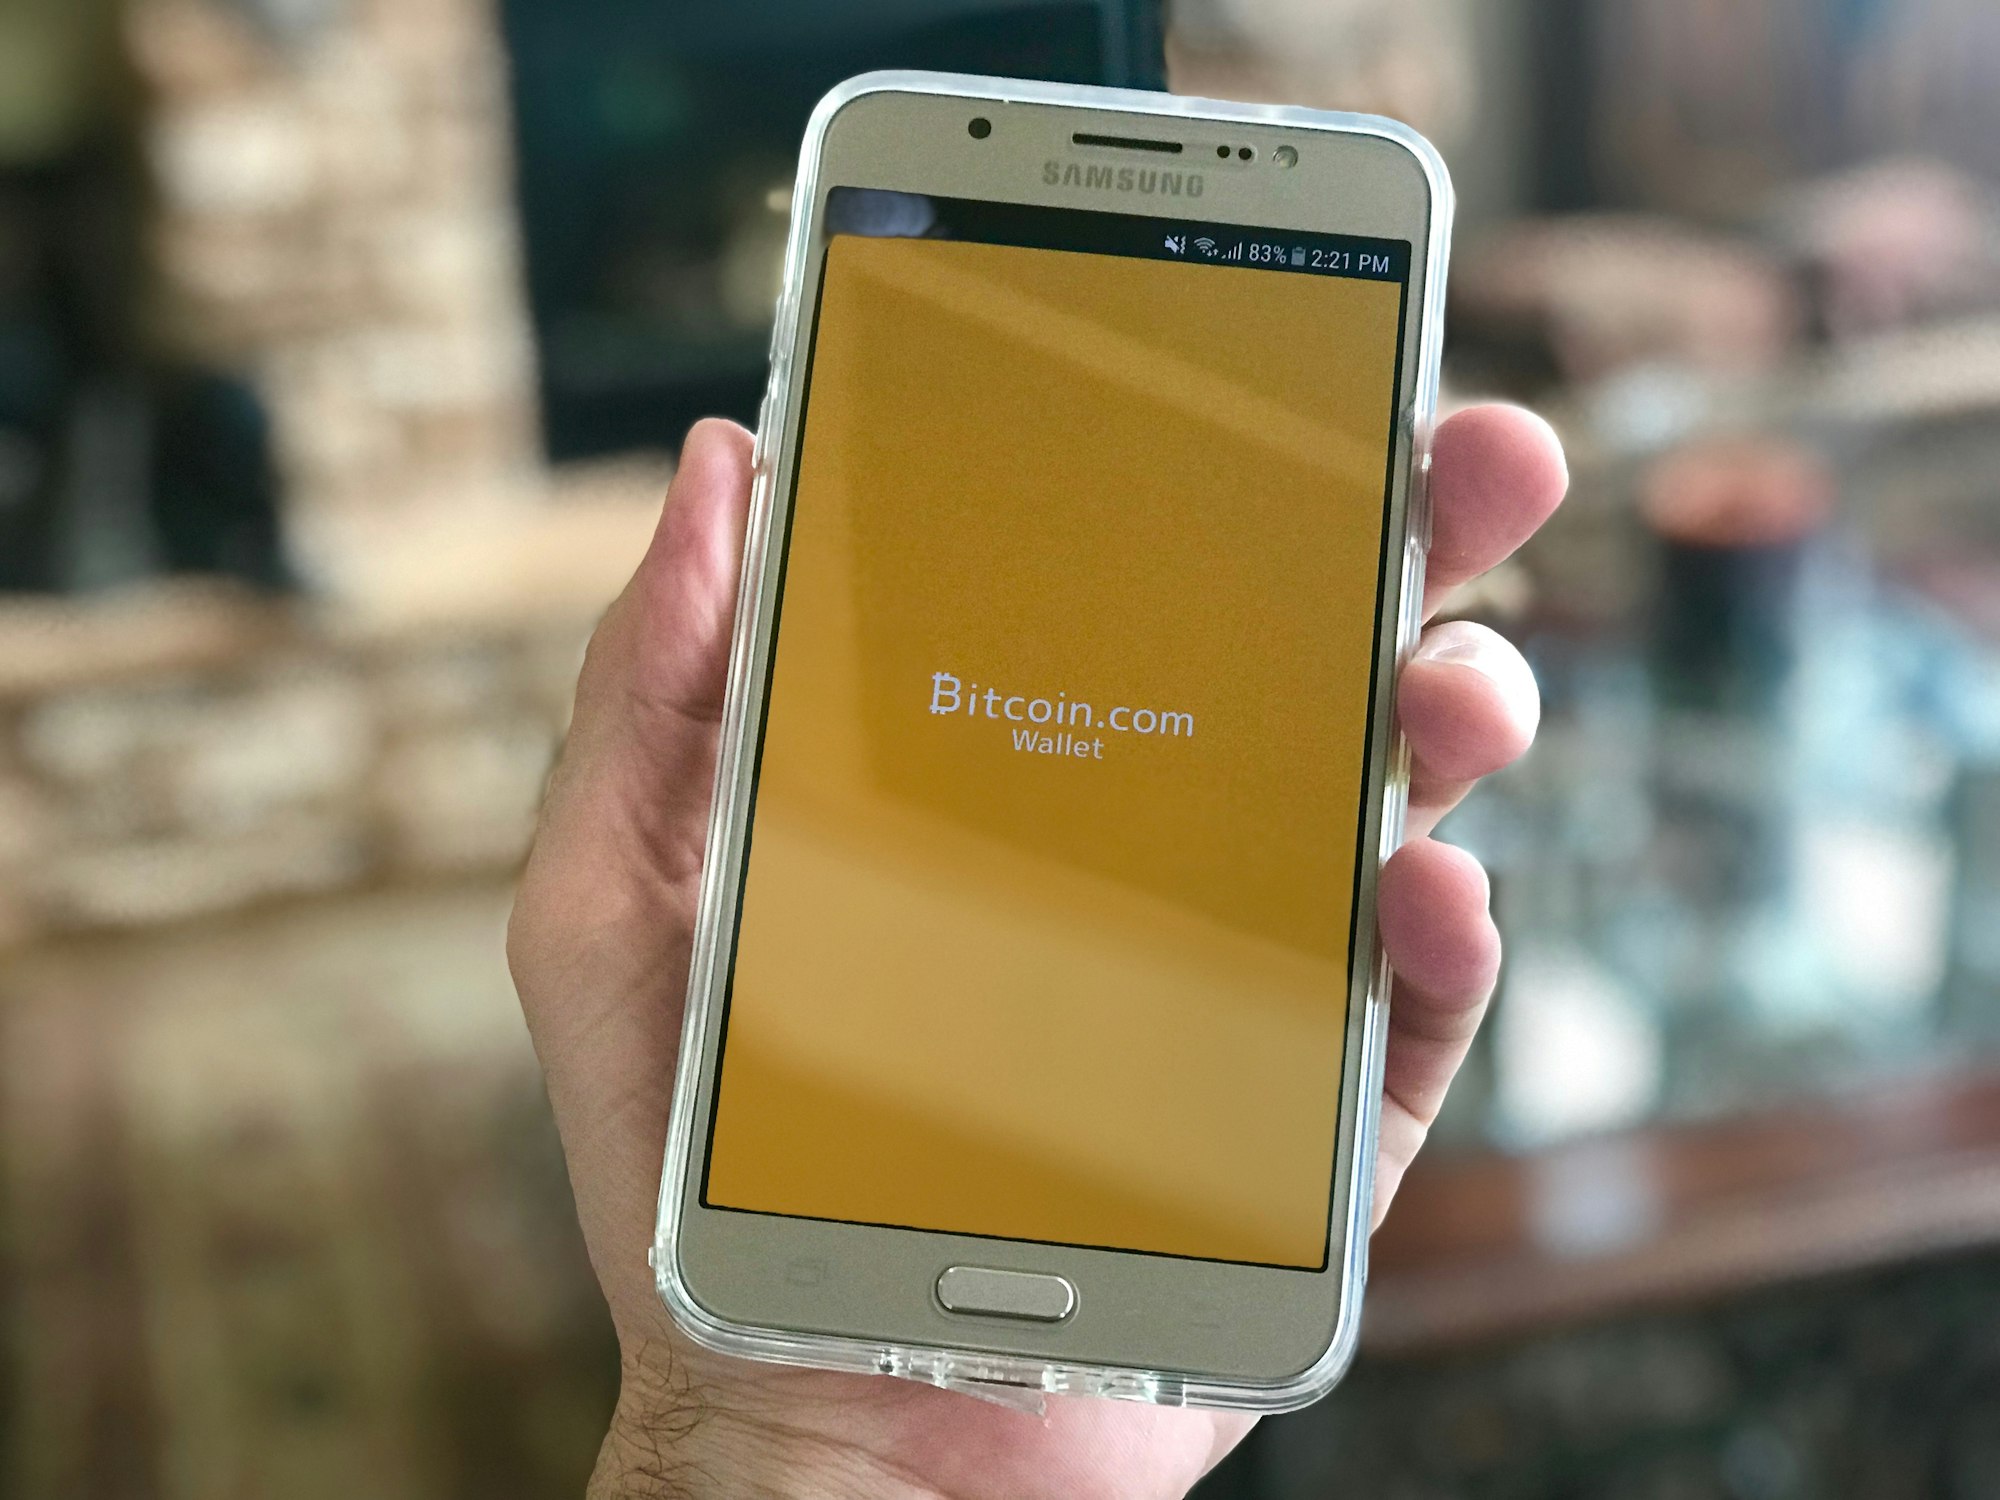 Bitcoin Wallet on an a Samsung Cell Phone.